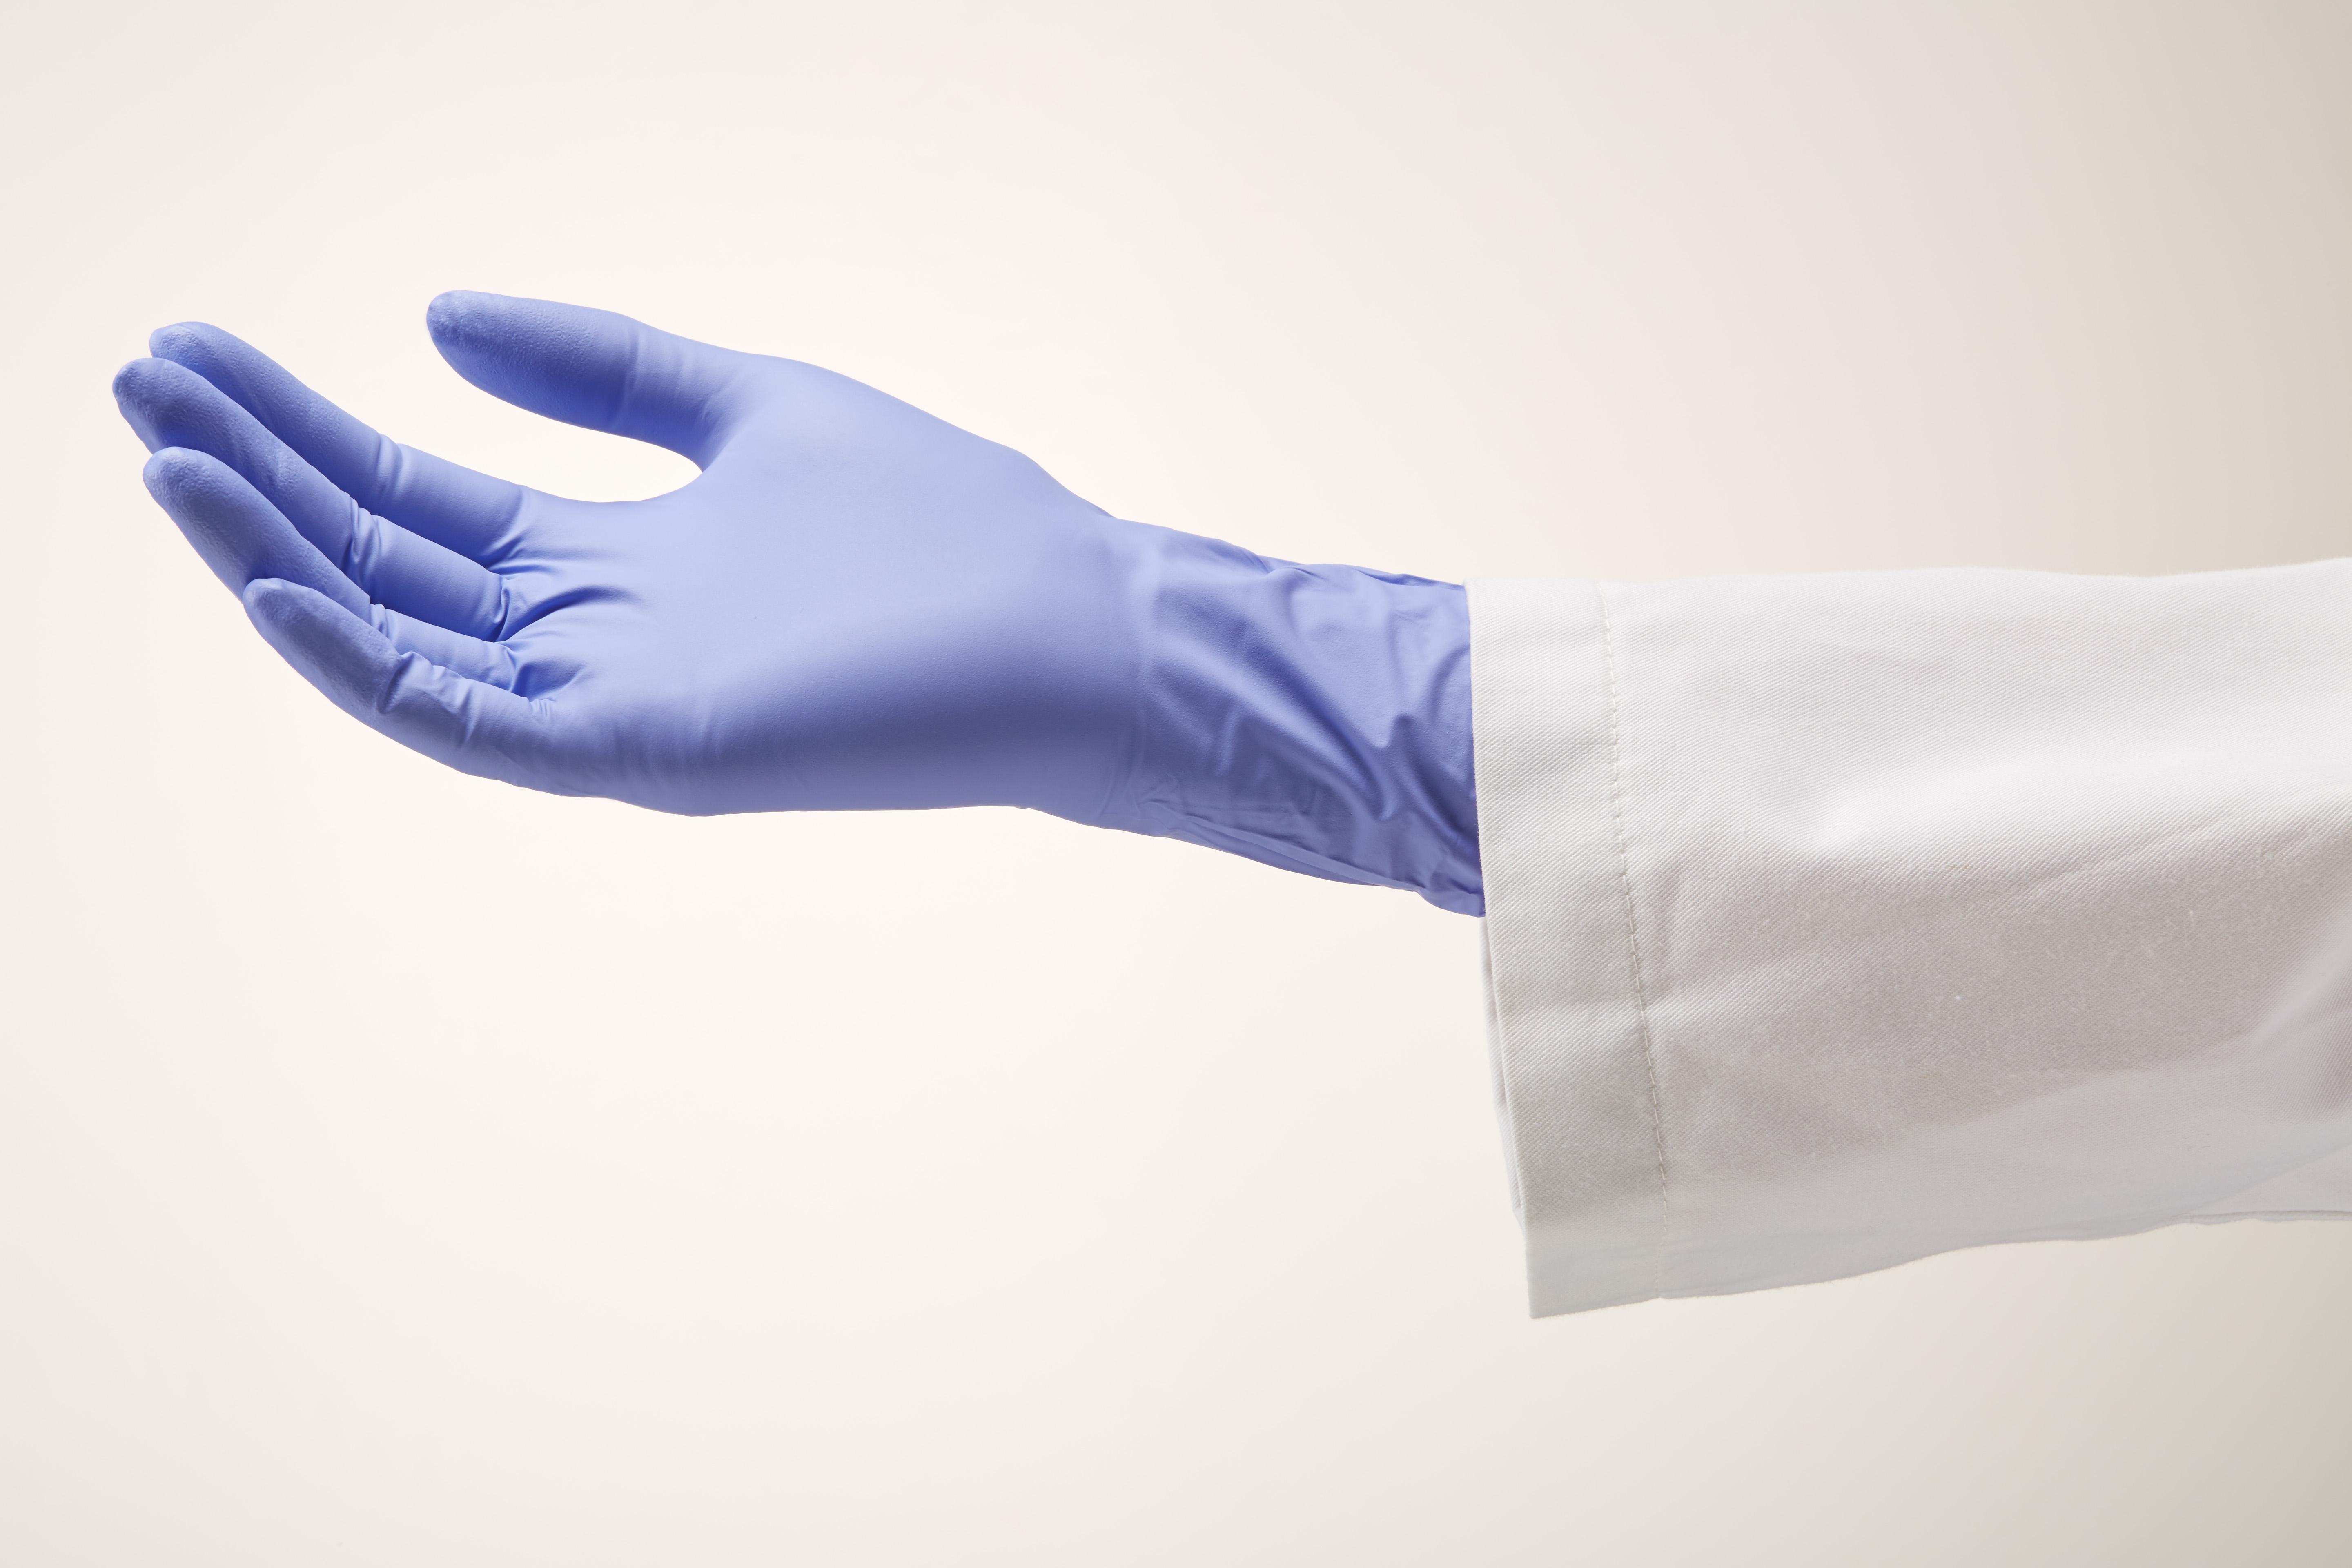 StarGuard PROTECT Nitrile Gloves, Powder Free, Violet-Blue, Size XL, Pk/ 10 x 100 gloves.